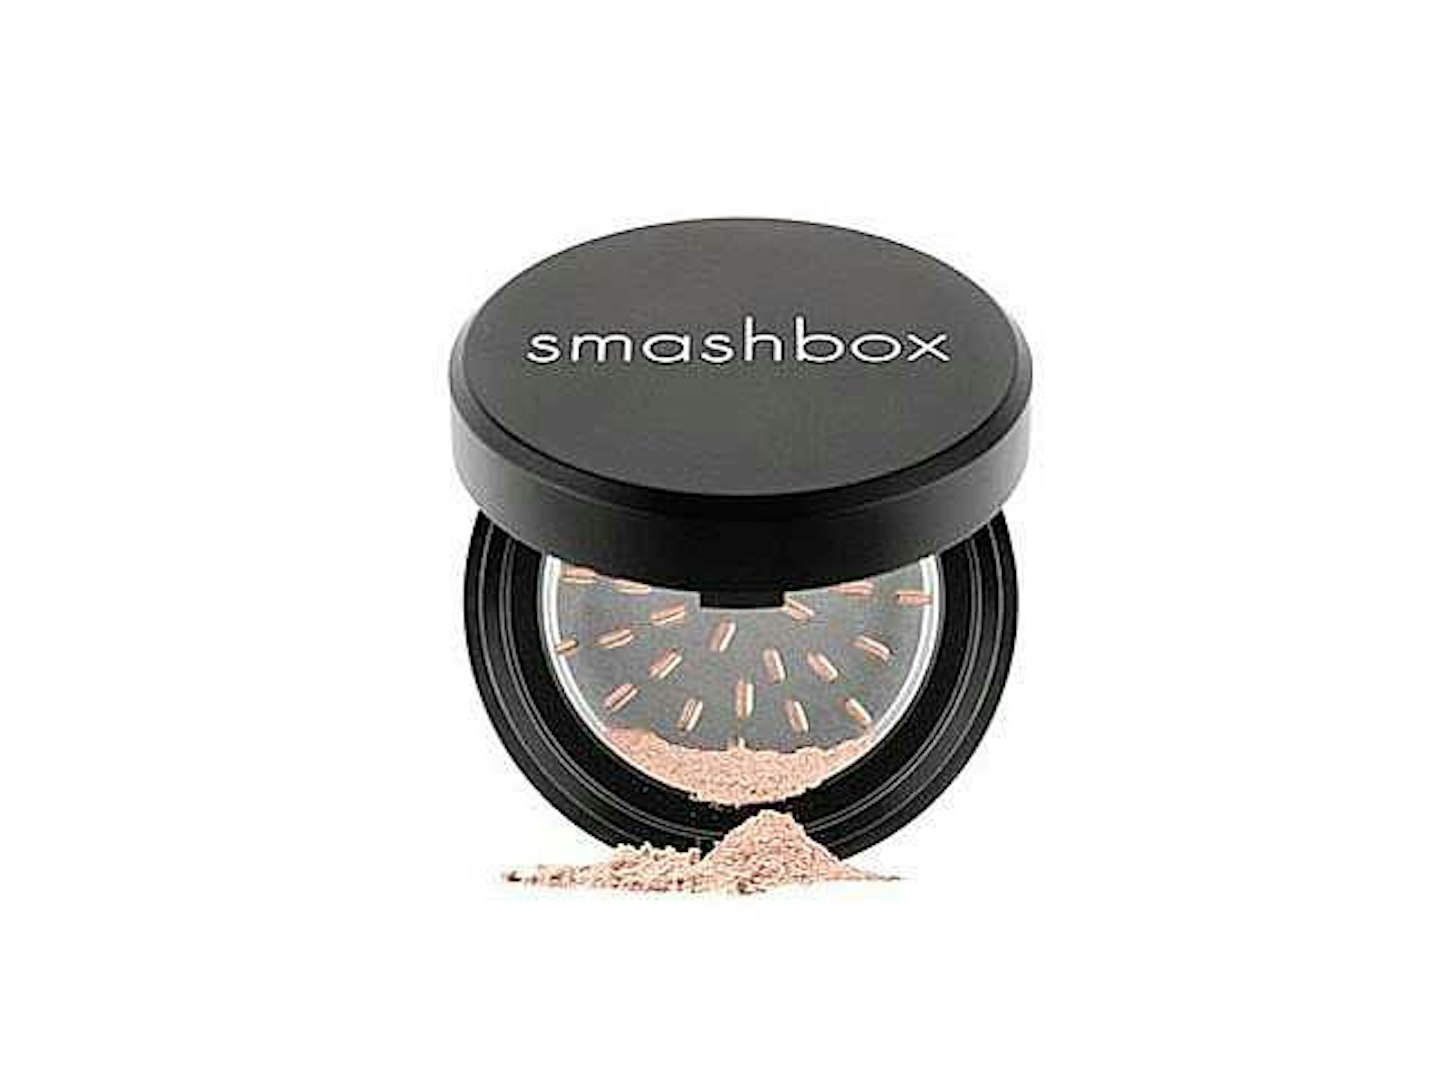 Best foundation for oily skin - Smashbox